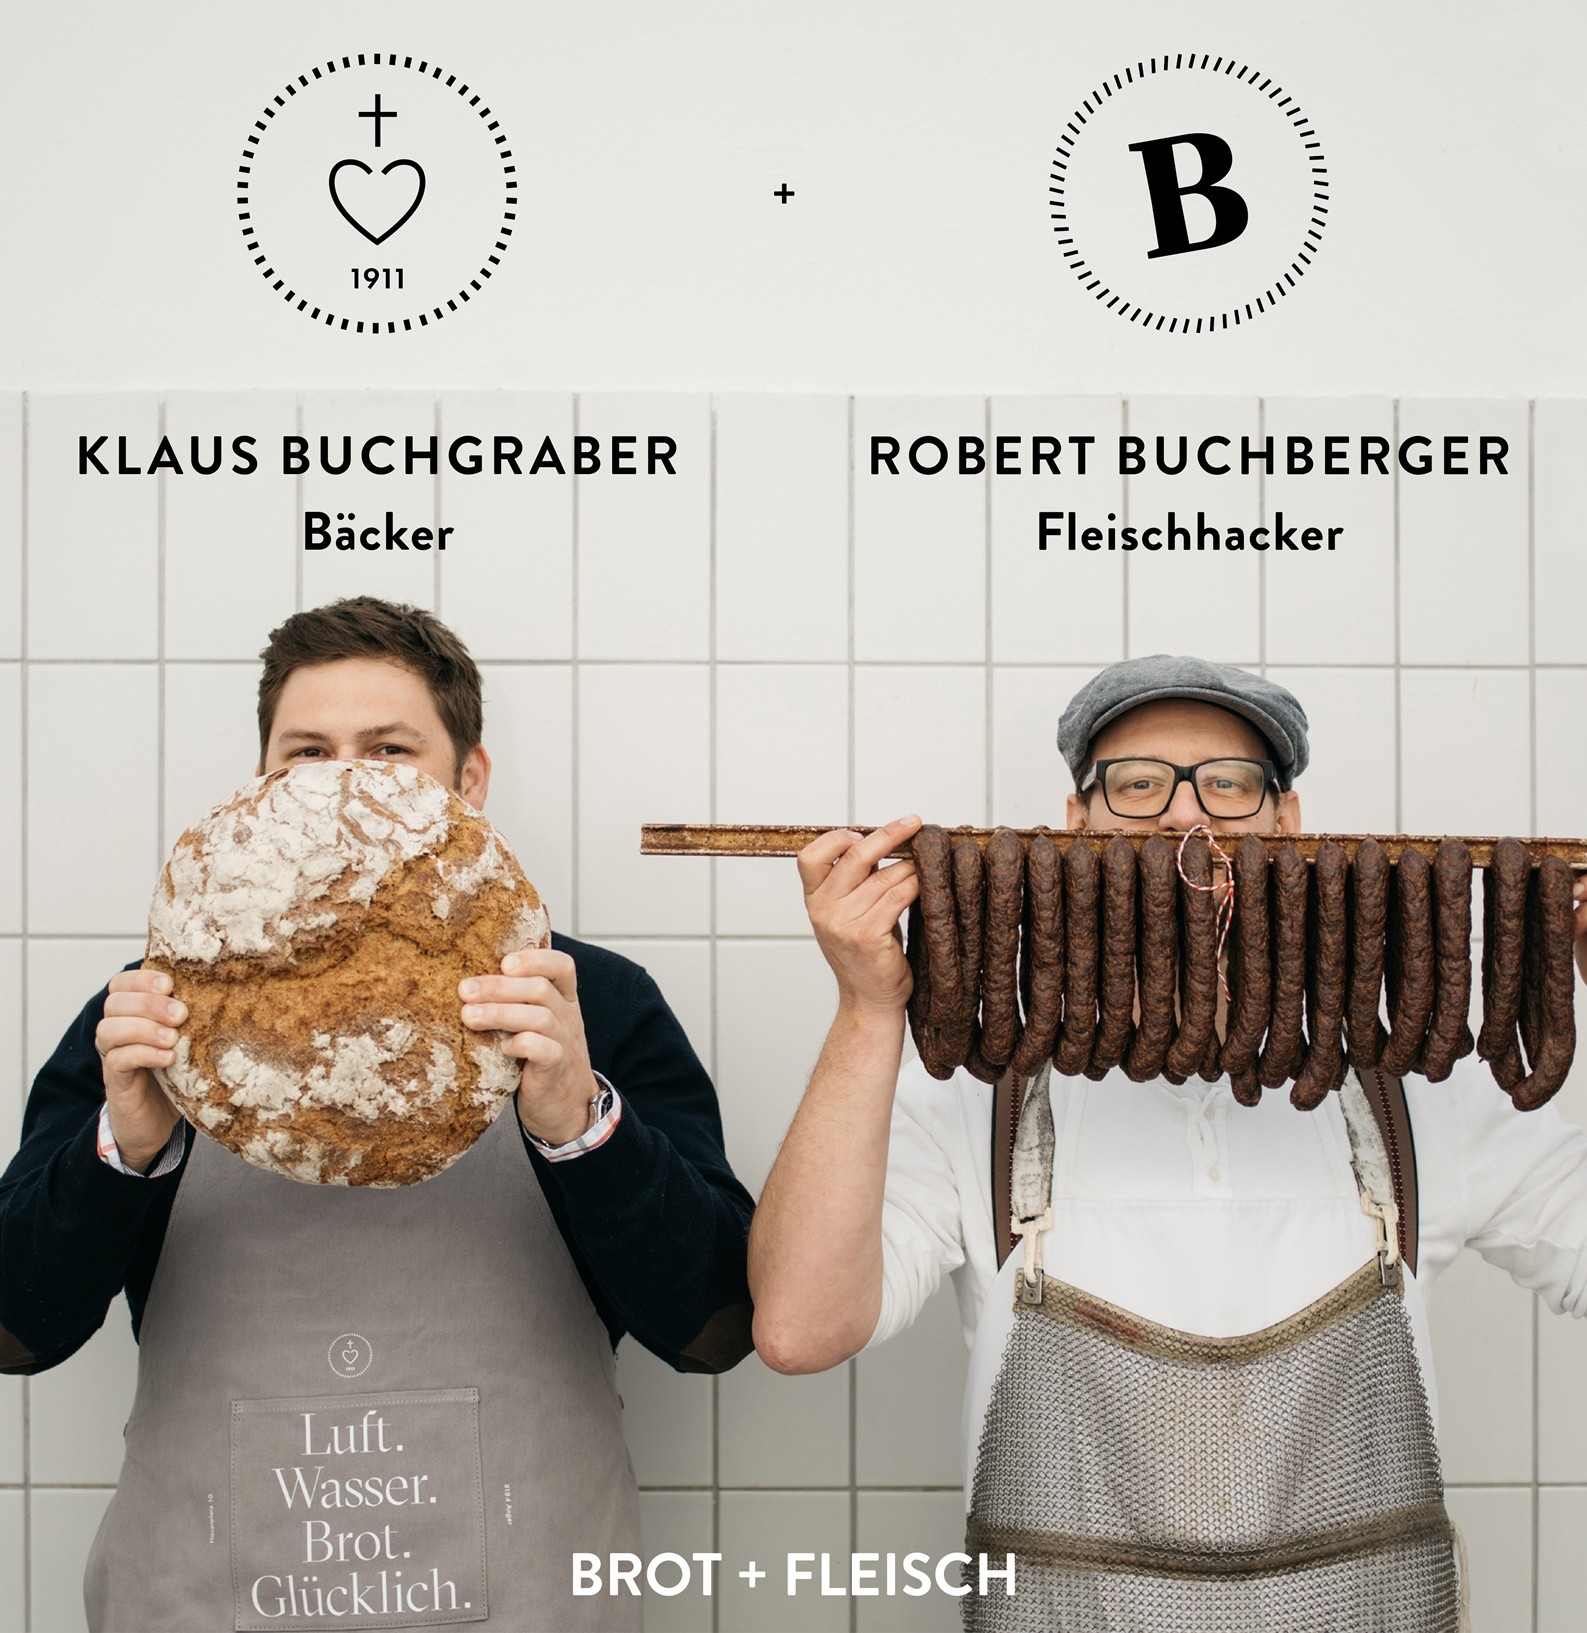 Foto zu Bäckerei Buchgraber + Fleischerei Buchberger